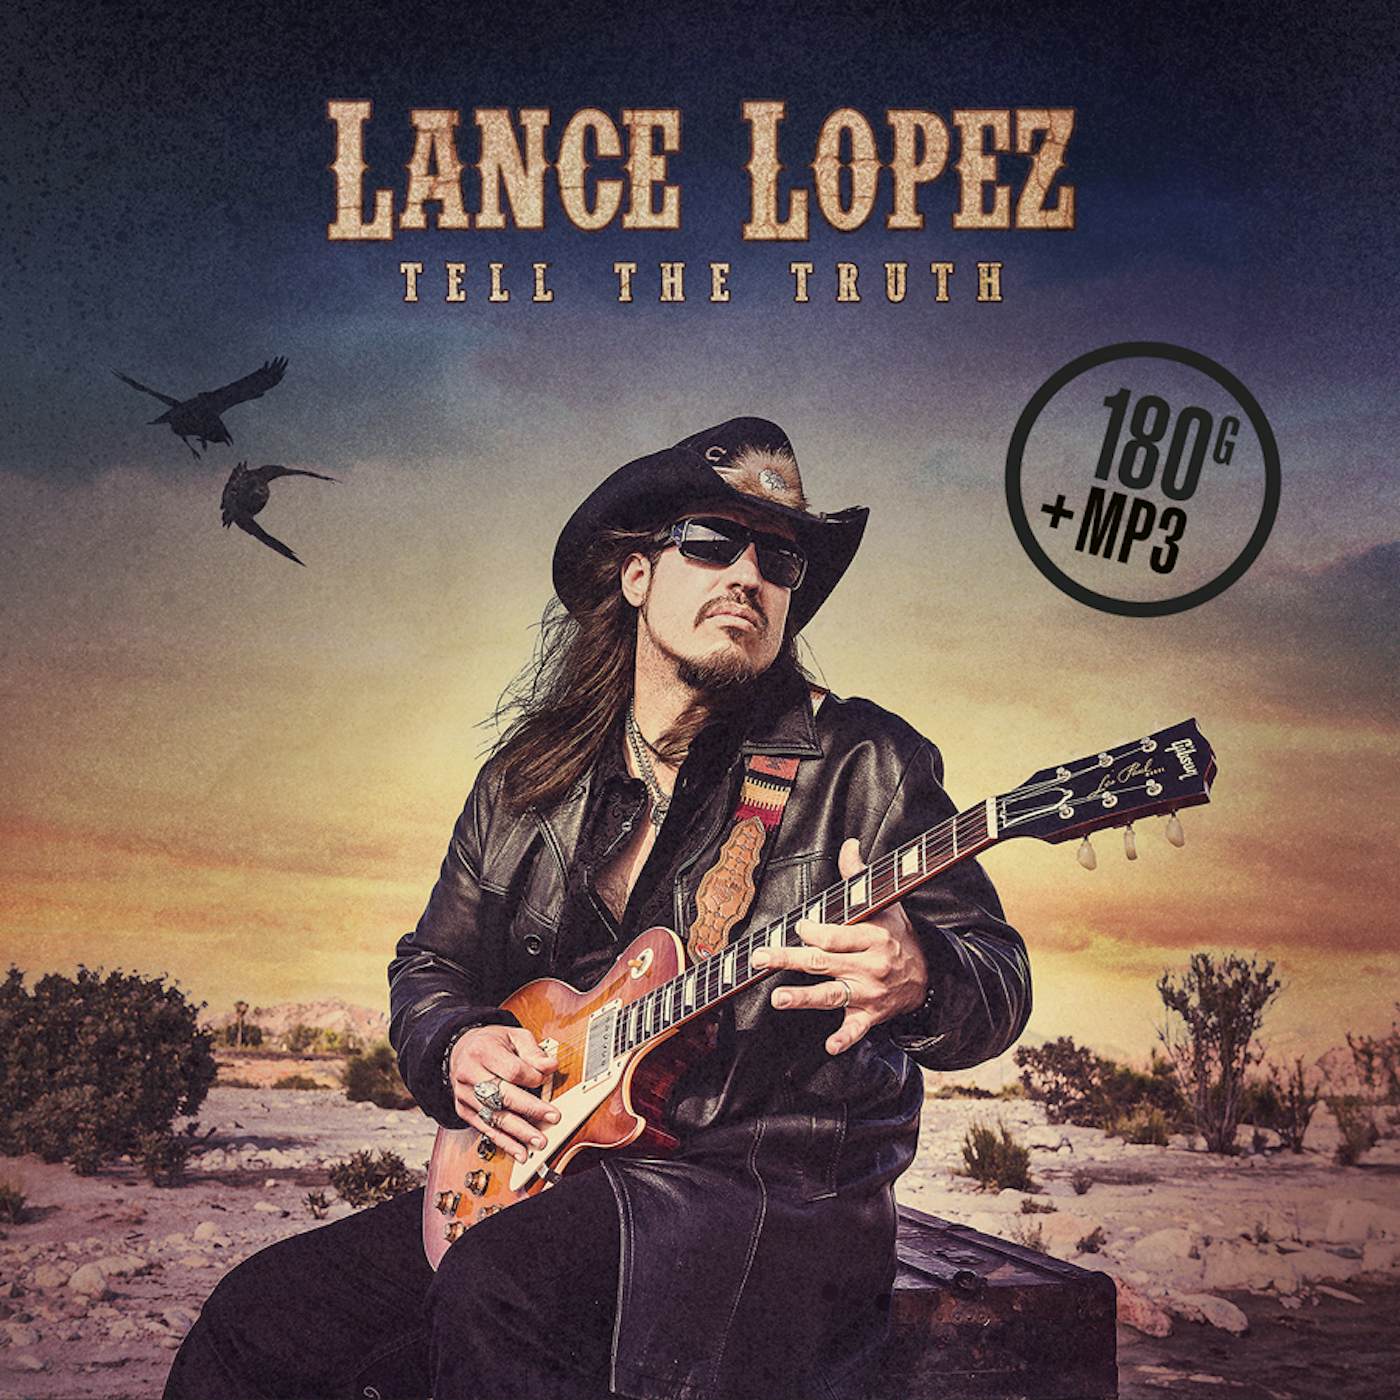 Lance Lopez Tell The Truth Vinyl Record